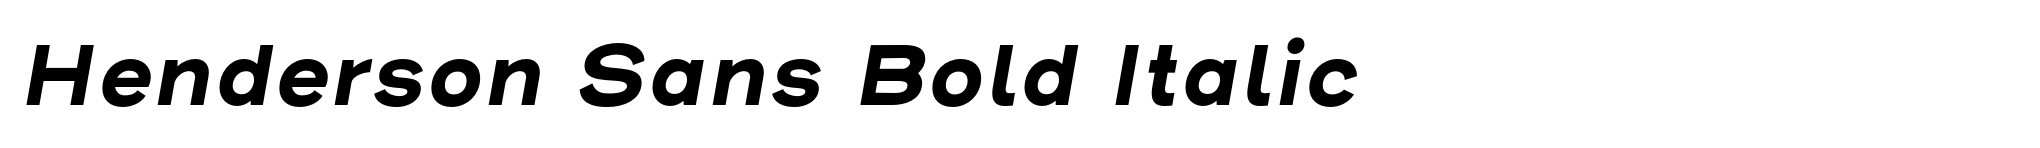 Henderson Sans Bold Italic image